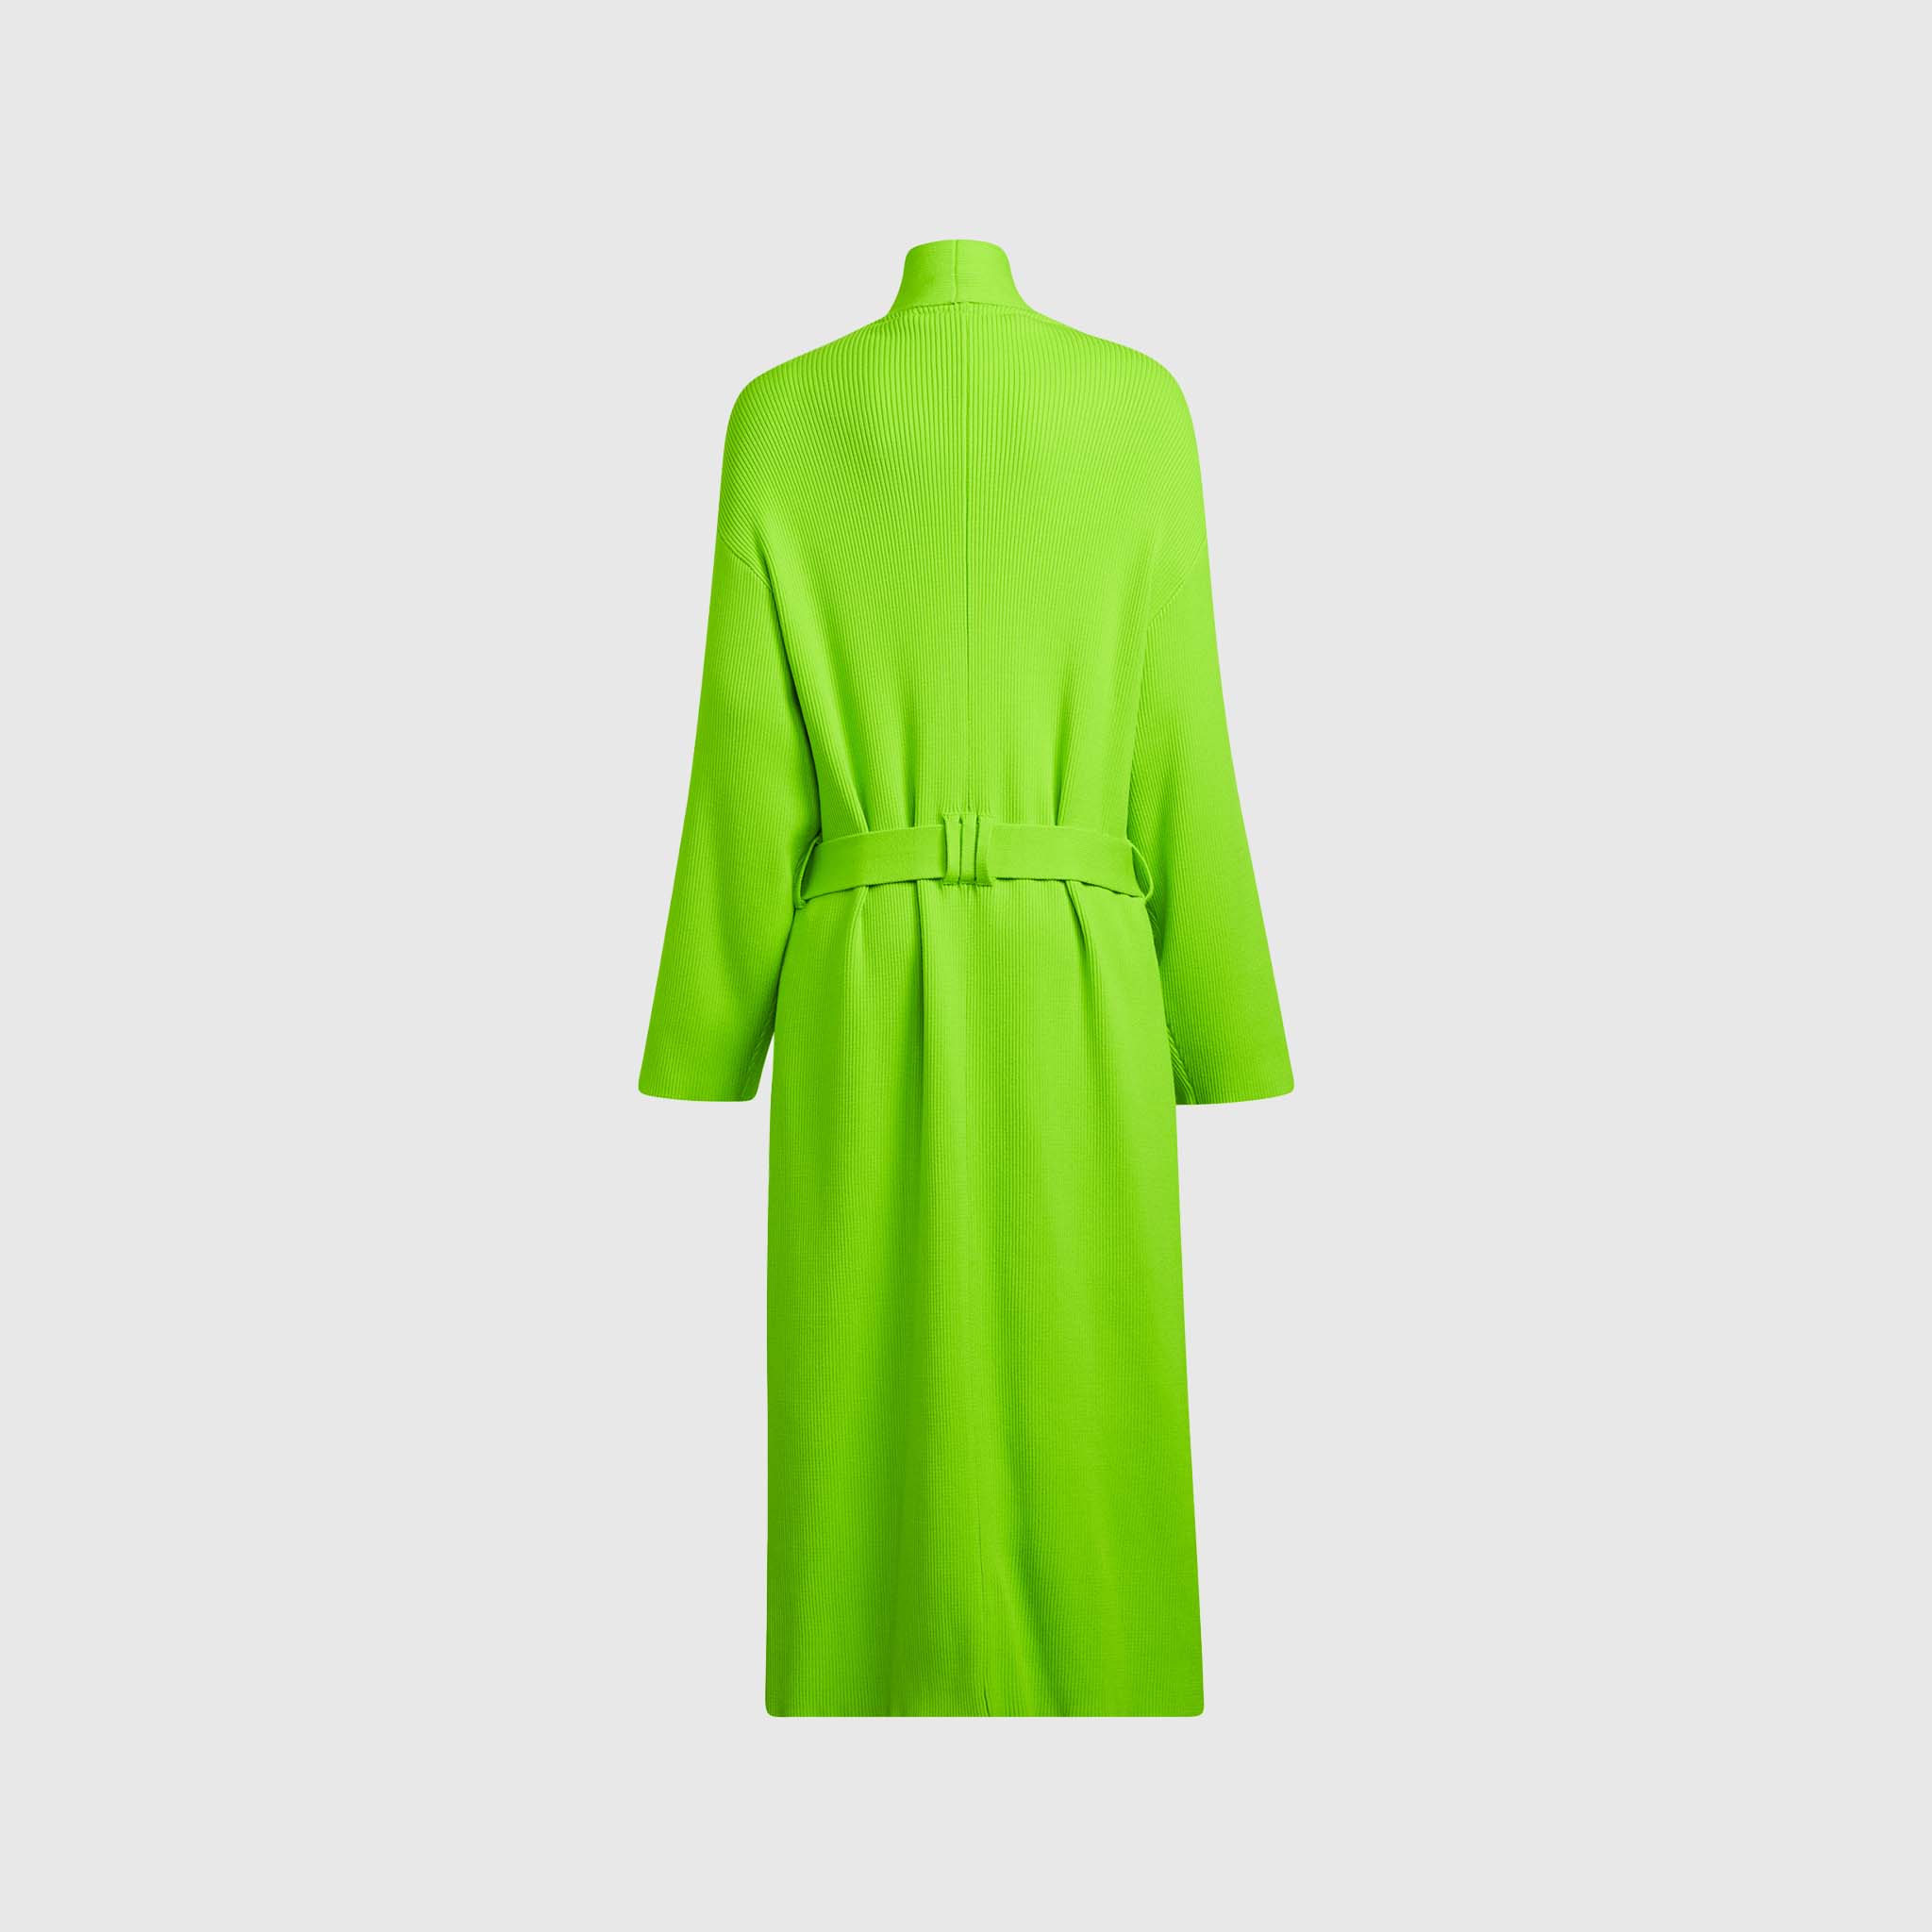 Luxury Designer Women Green Robe Sleepwear Towel Design Hooded Dressing Gown  Autumn Winter Long Sleeve Robes323j From Qbilp, $85.06 | DHgate.Com